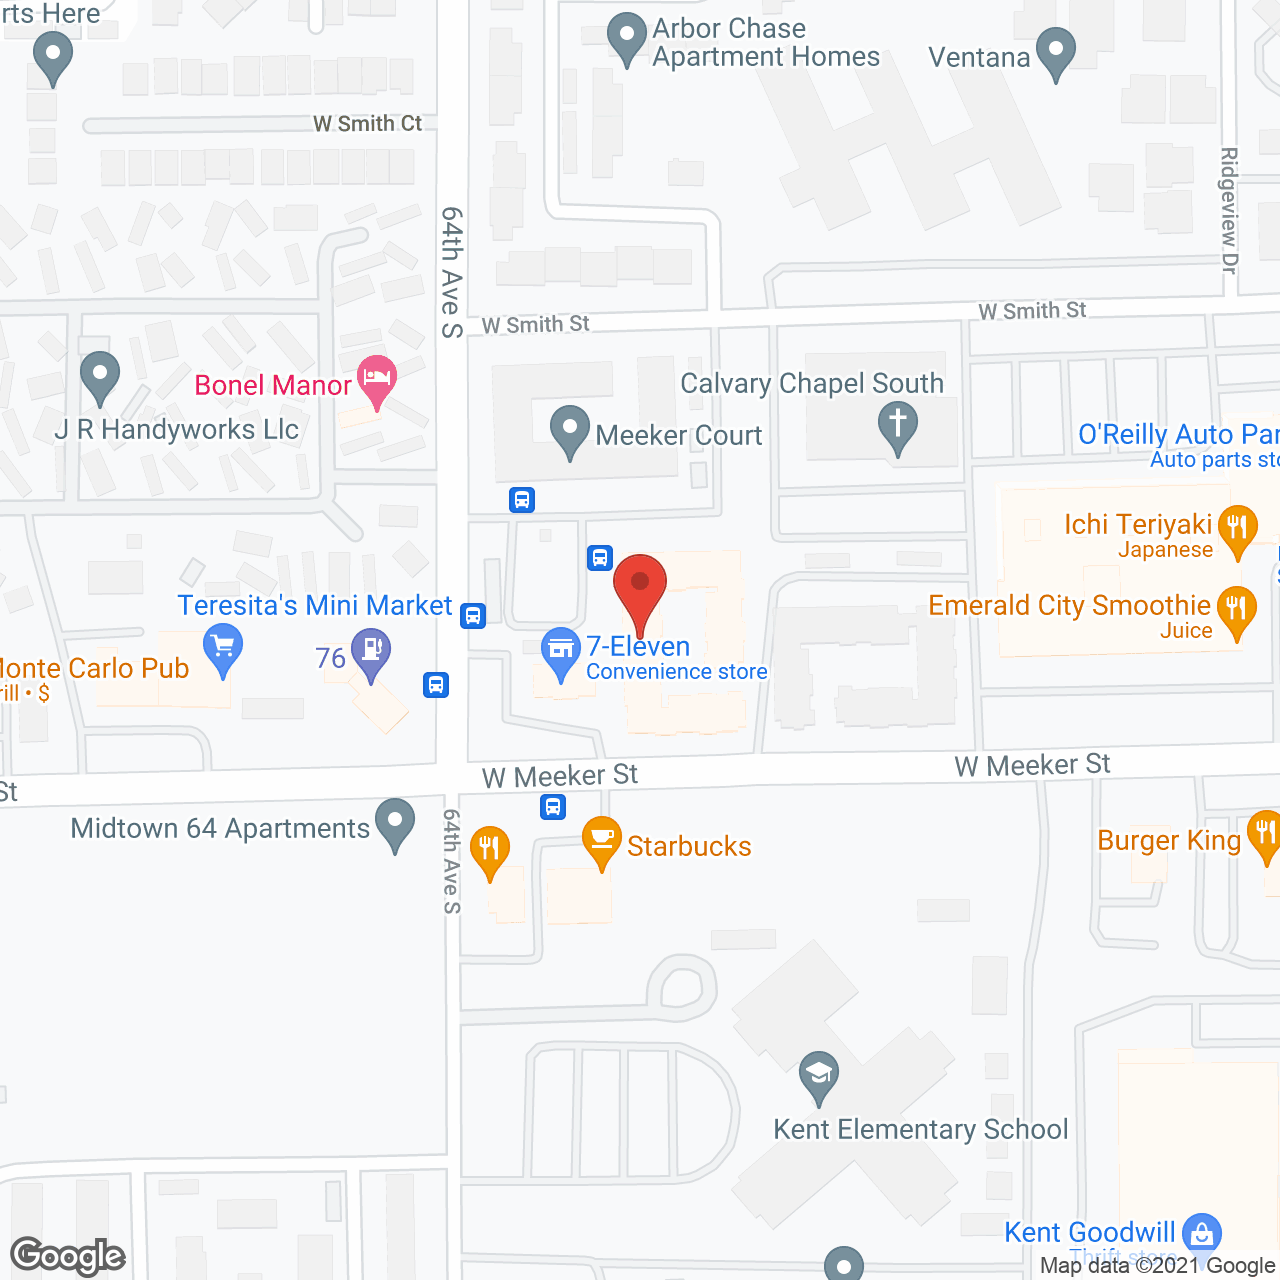 Tri Court - Park in google map